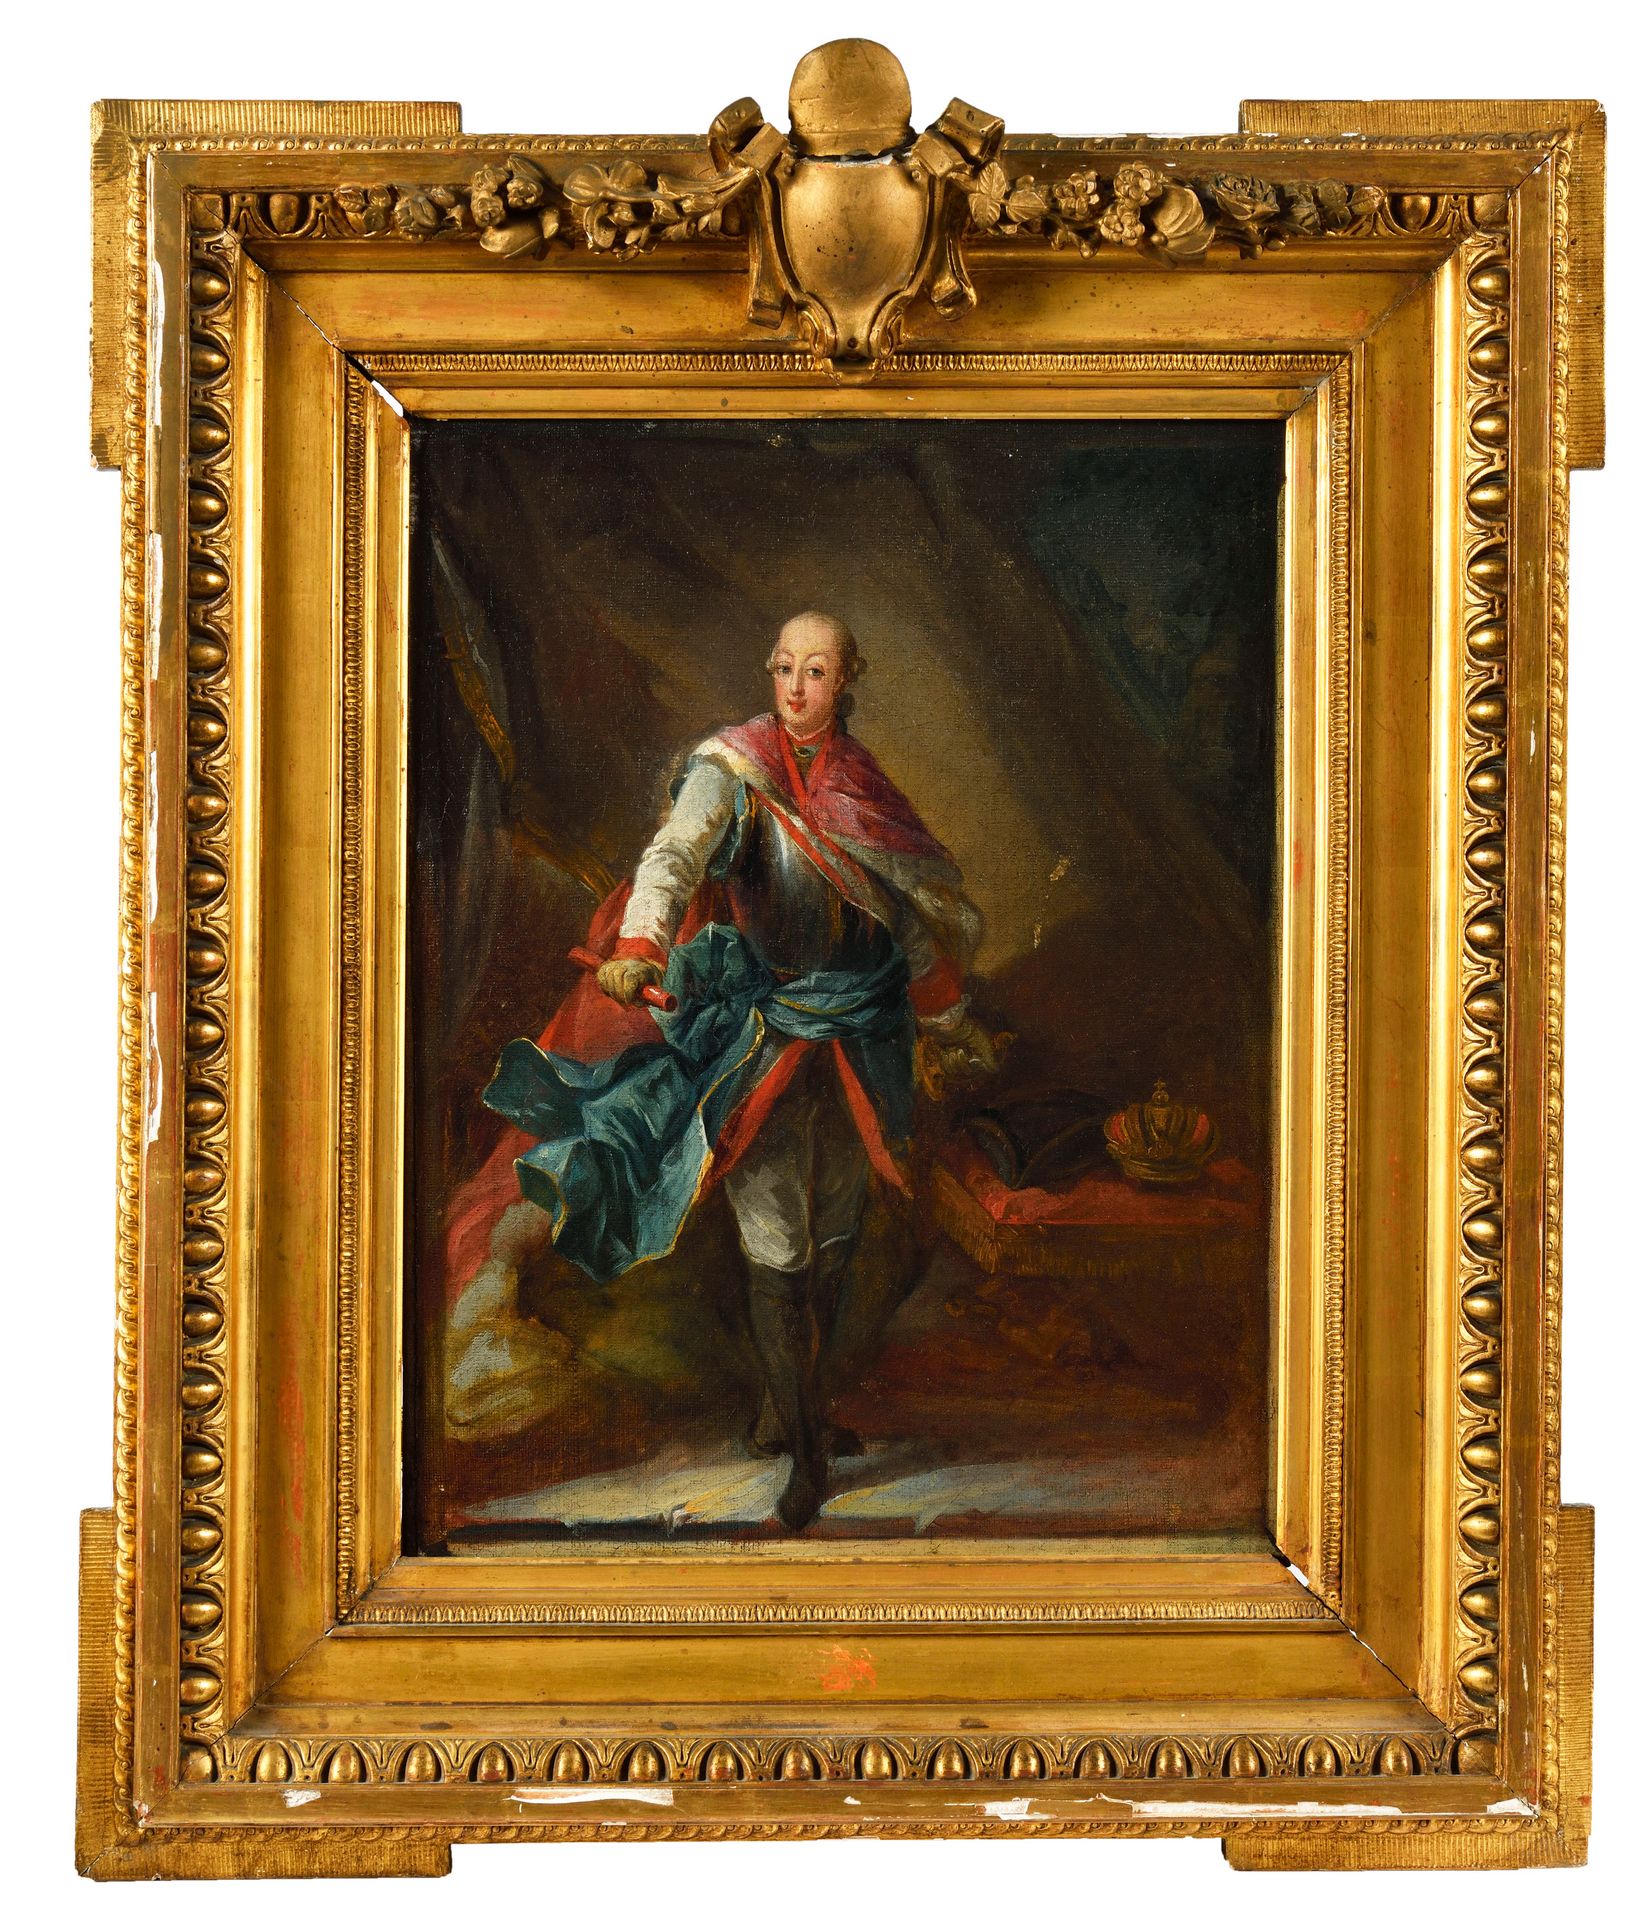 Null 18世纪奥地利学校
推测为哈布斯堡皇帝约瑟夫二世的画像
布面油画
高：38厘米
宽度：29.5厘米
木质框架和镀金灰泥
褪色，修复。